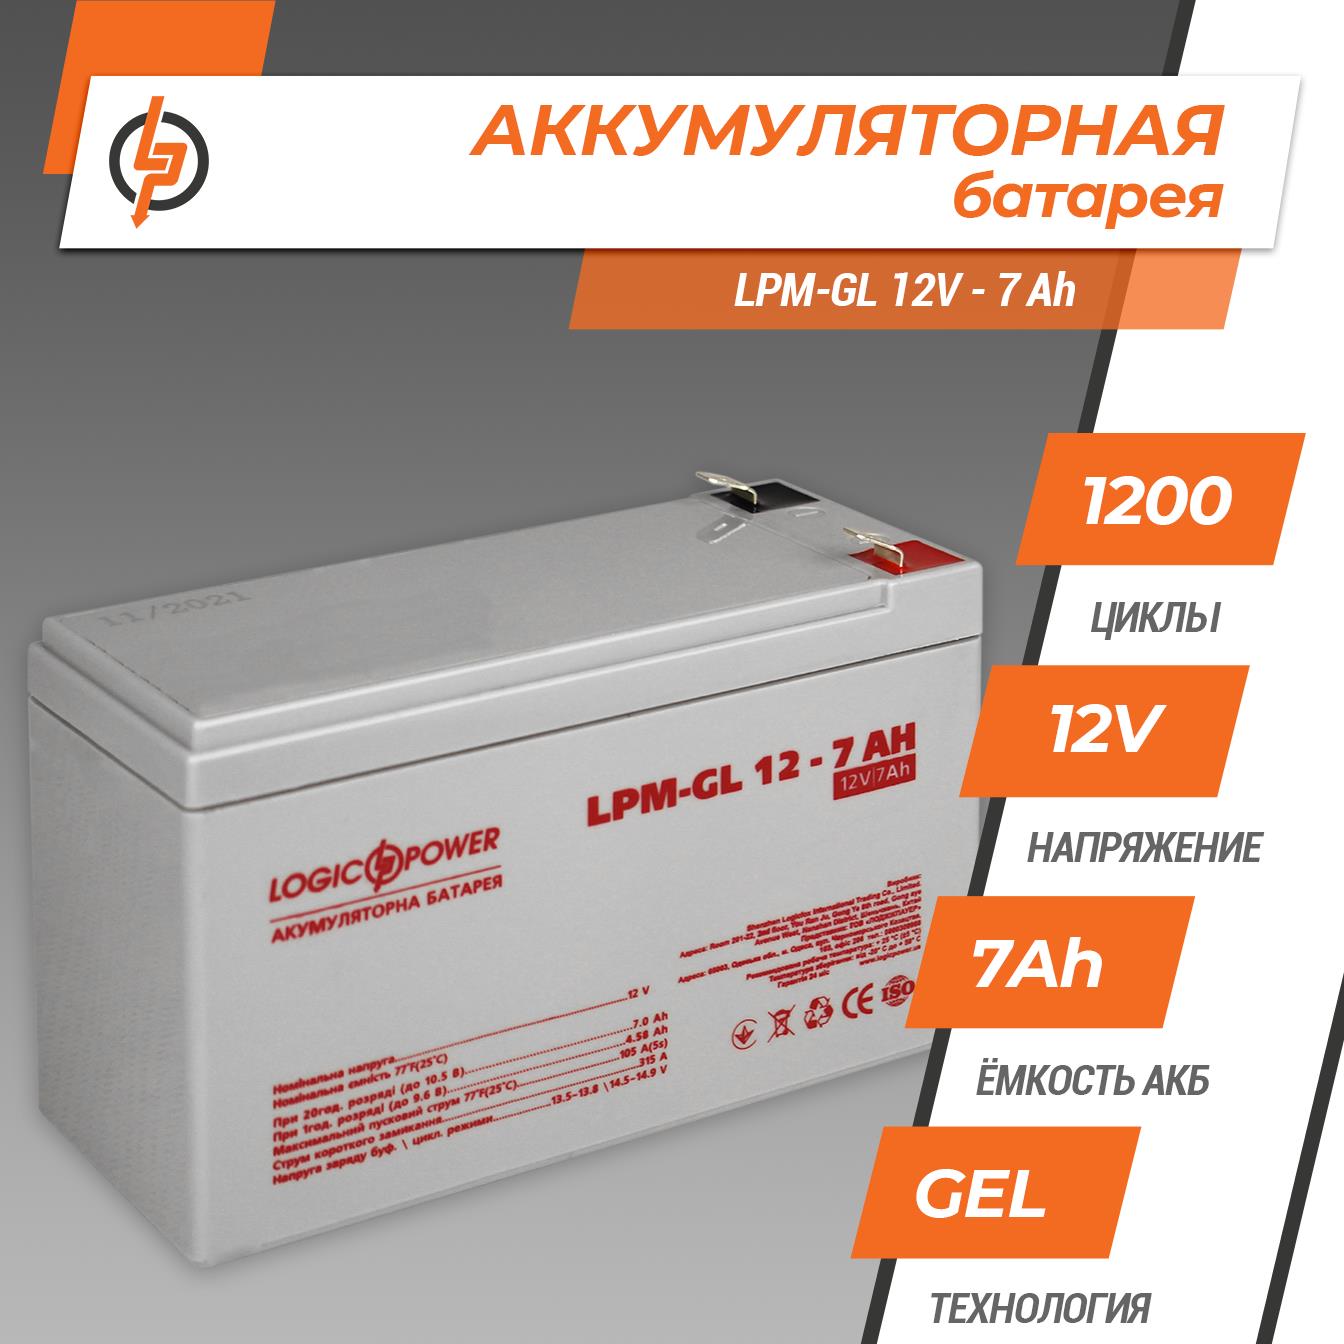 Акумулятор гелевий LogicPower LPM-GL 12V - 7 Ah (6560) ціна 693 грн - фотографія 2